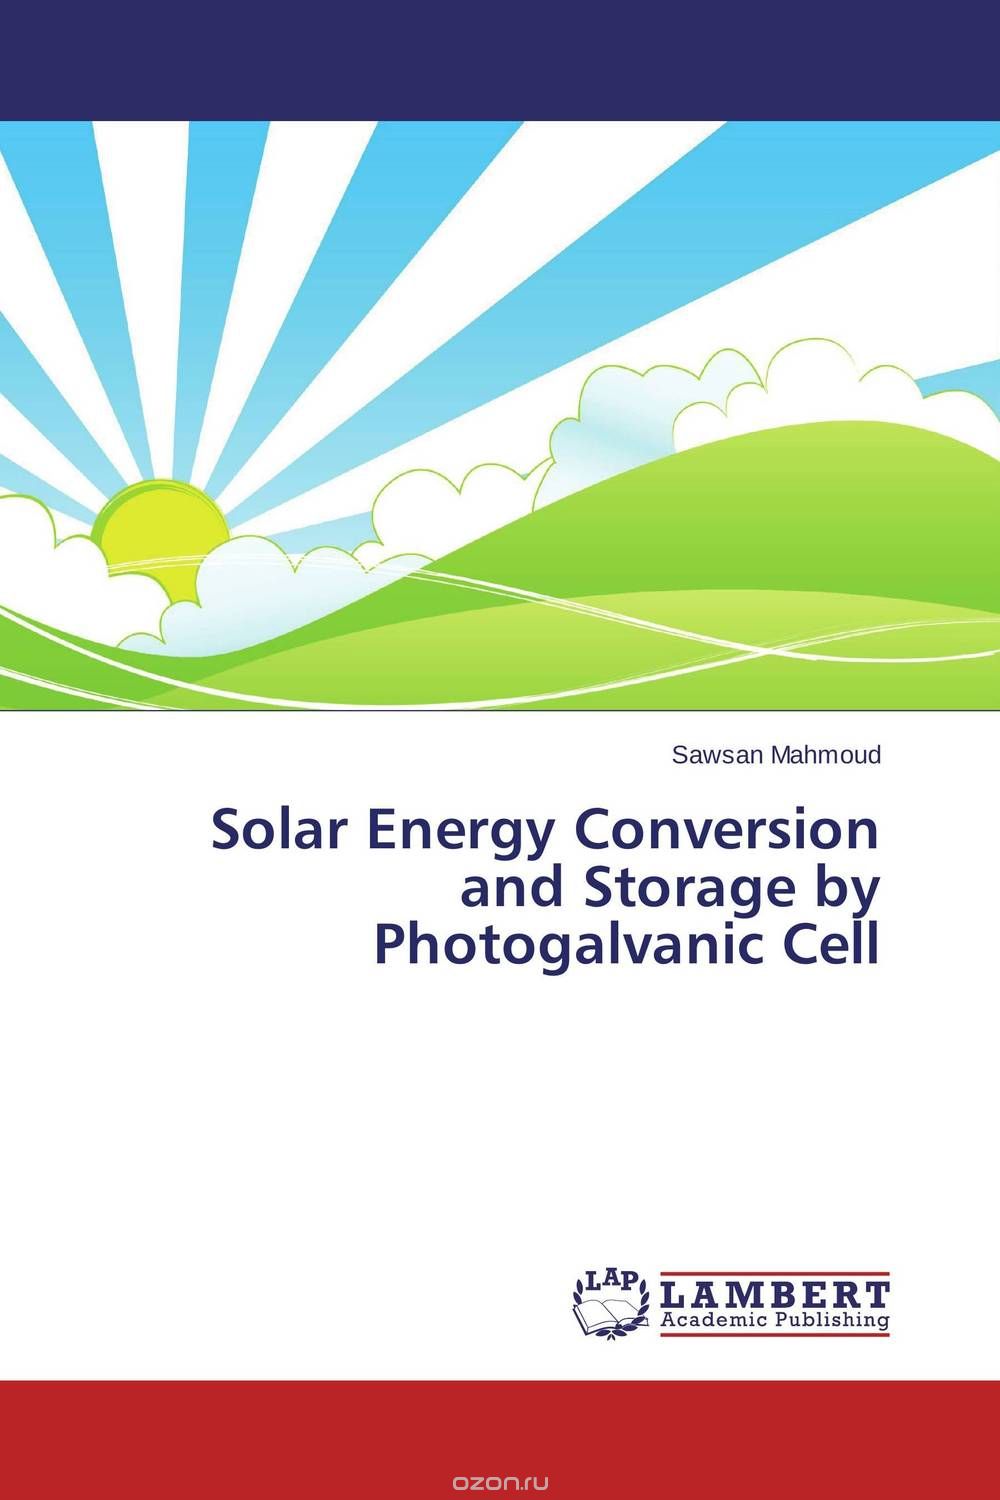 Скачать книгу "Solar Energy Conversion and Storage by Photogalvanic Cell"